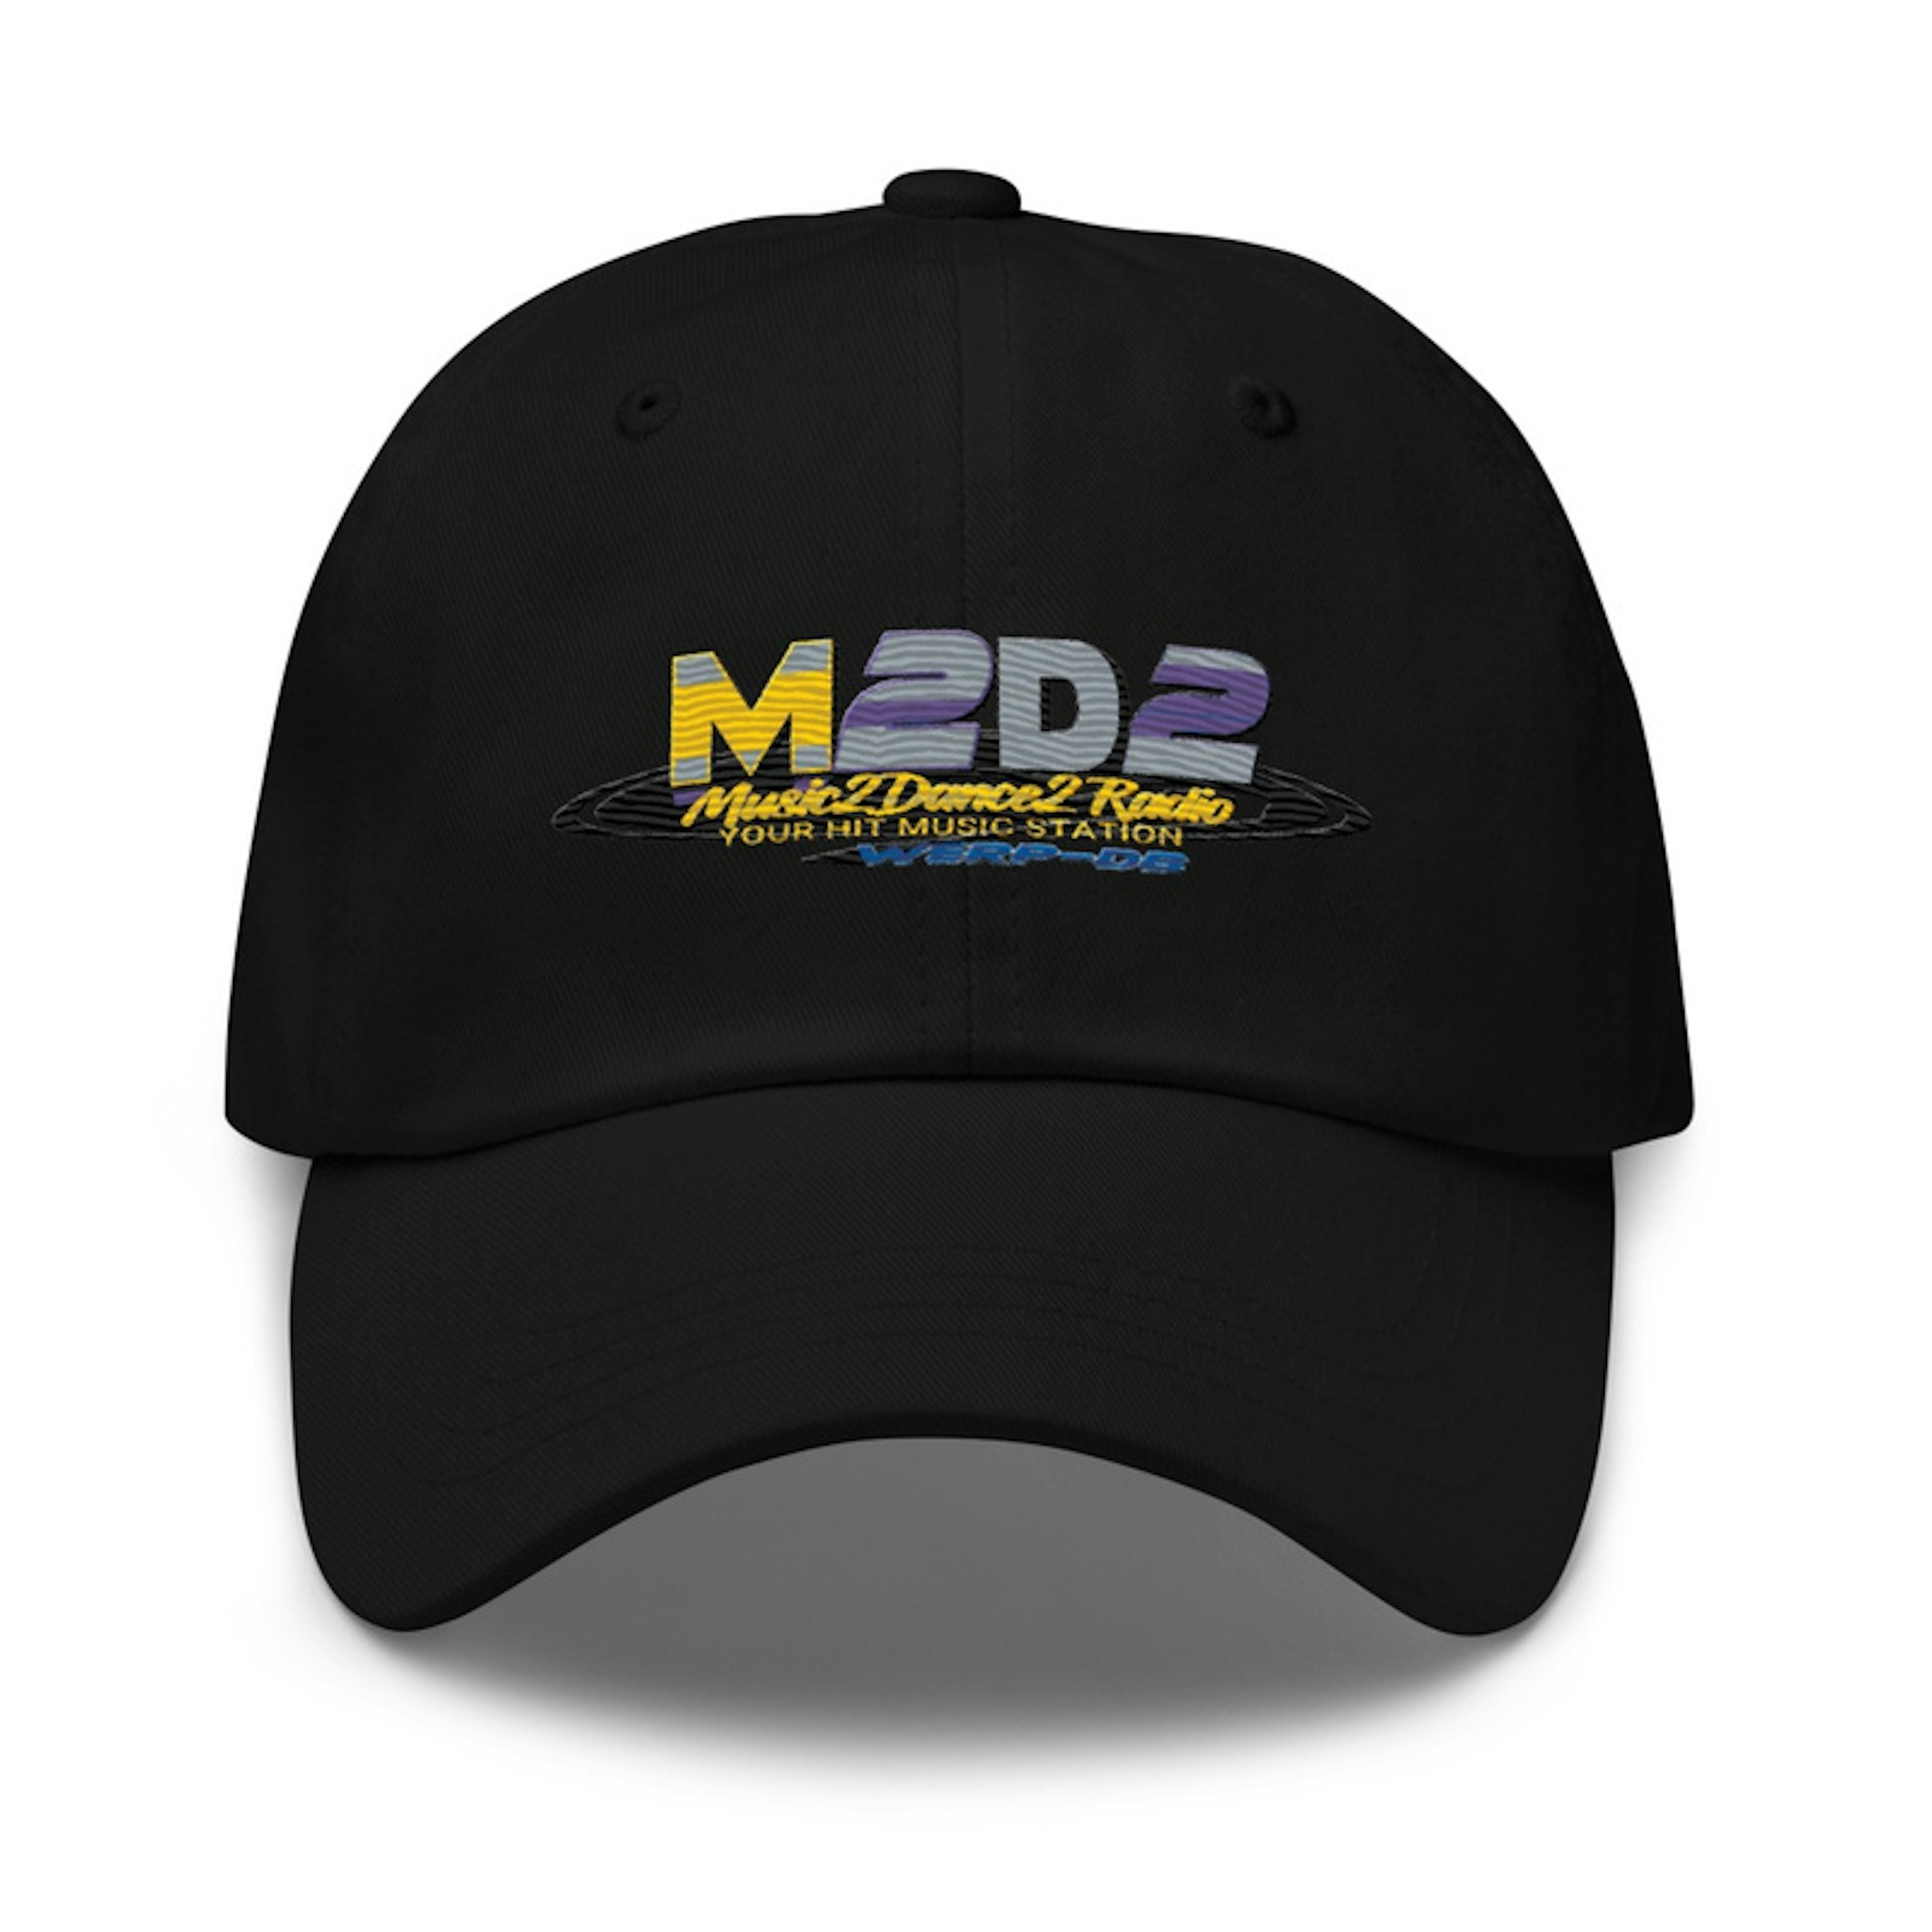 M2d2radio merch